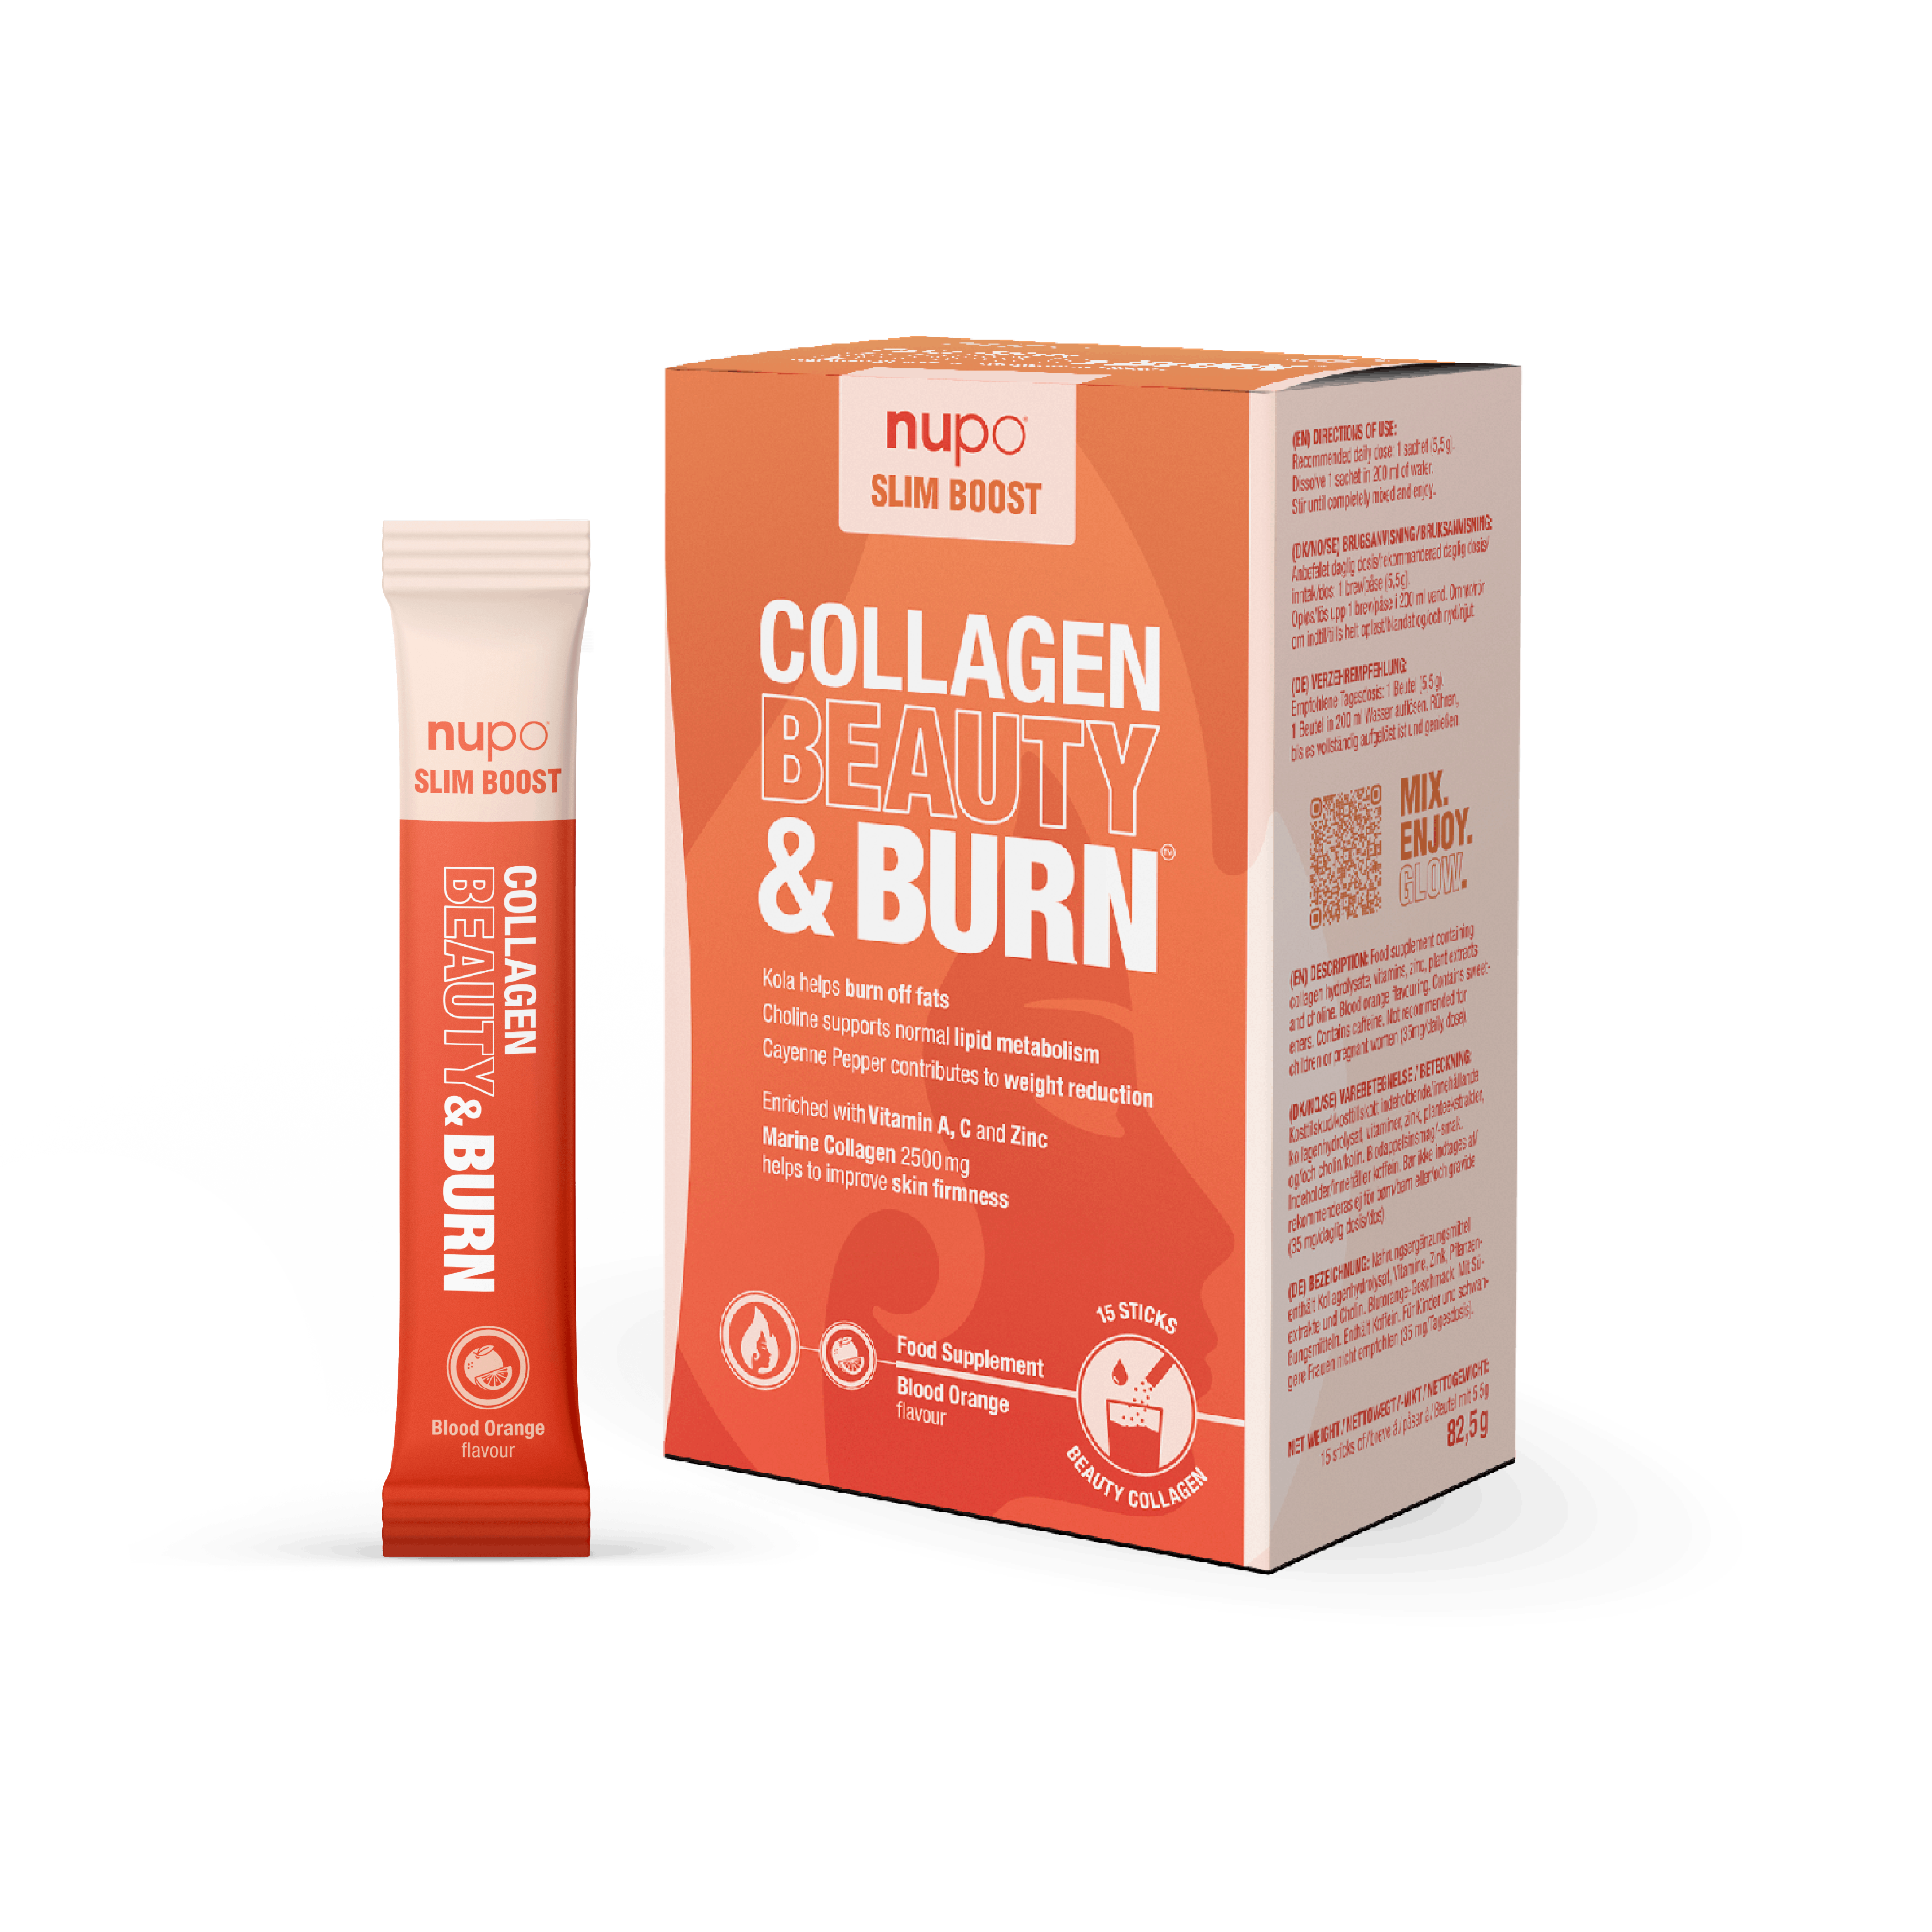 Nupo Slim Boost Collagen Beauty & Burn 15 pcs - £12.99